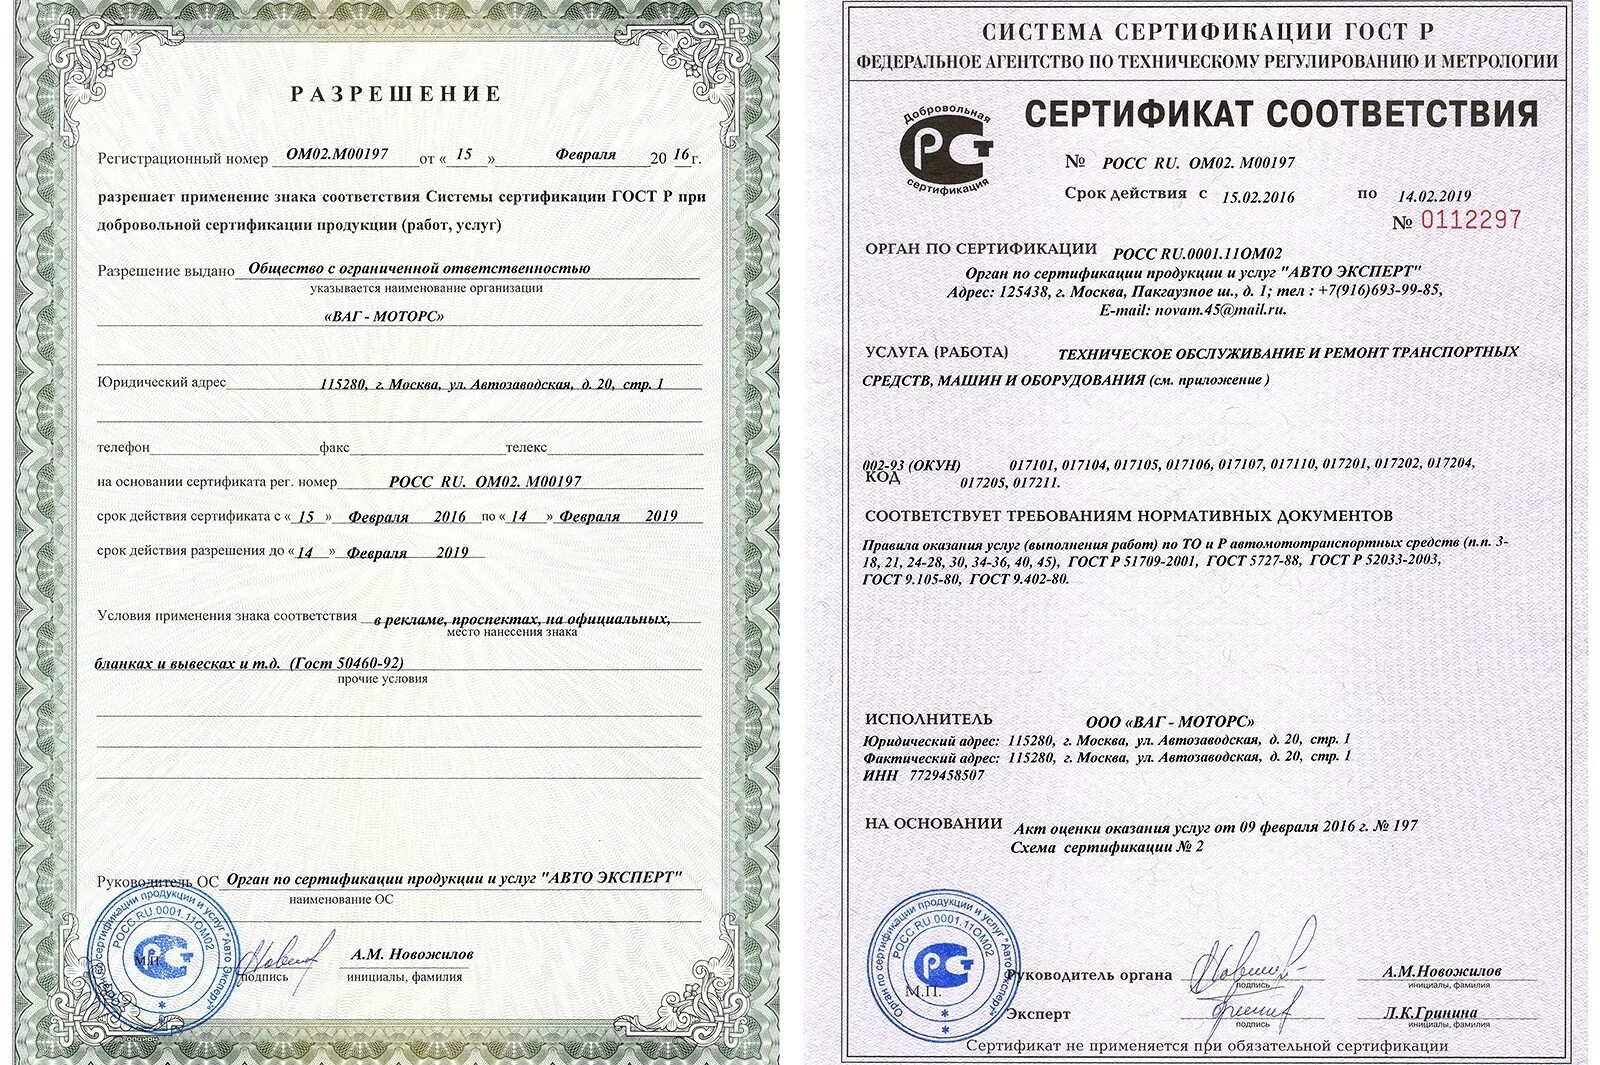 Сертификация технической продукции. Сертификат соответствия. Сертификат соотвестви. Сертификат соответствия на товар. Обязательный сертификат качества.